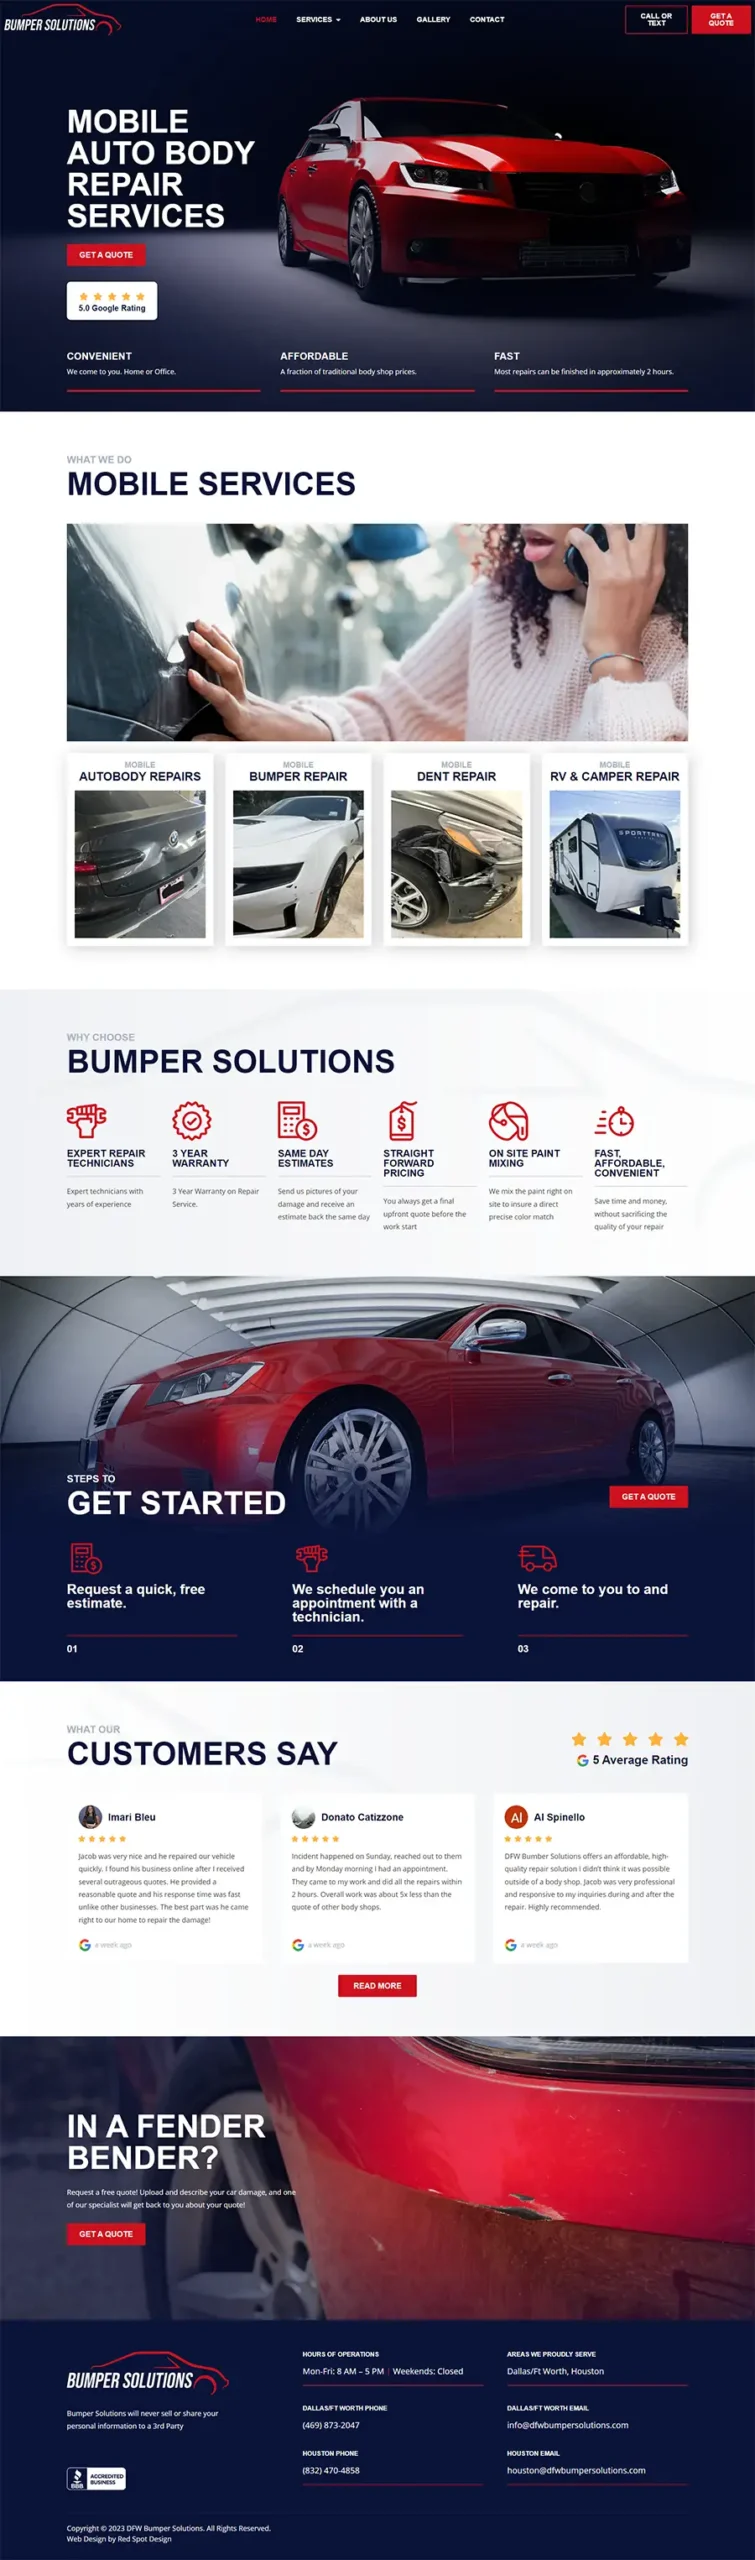 mobile auto body repair company new website design